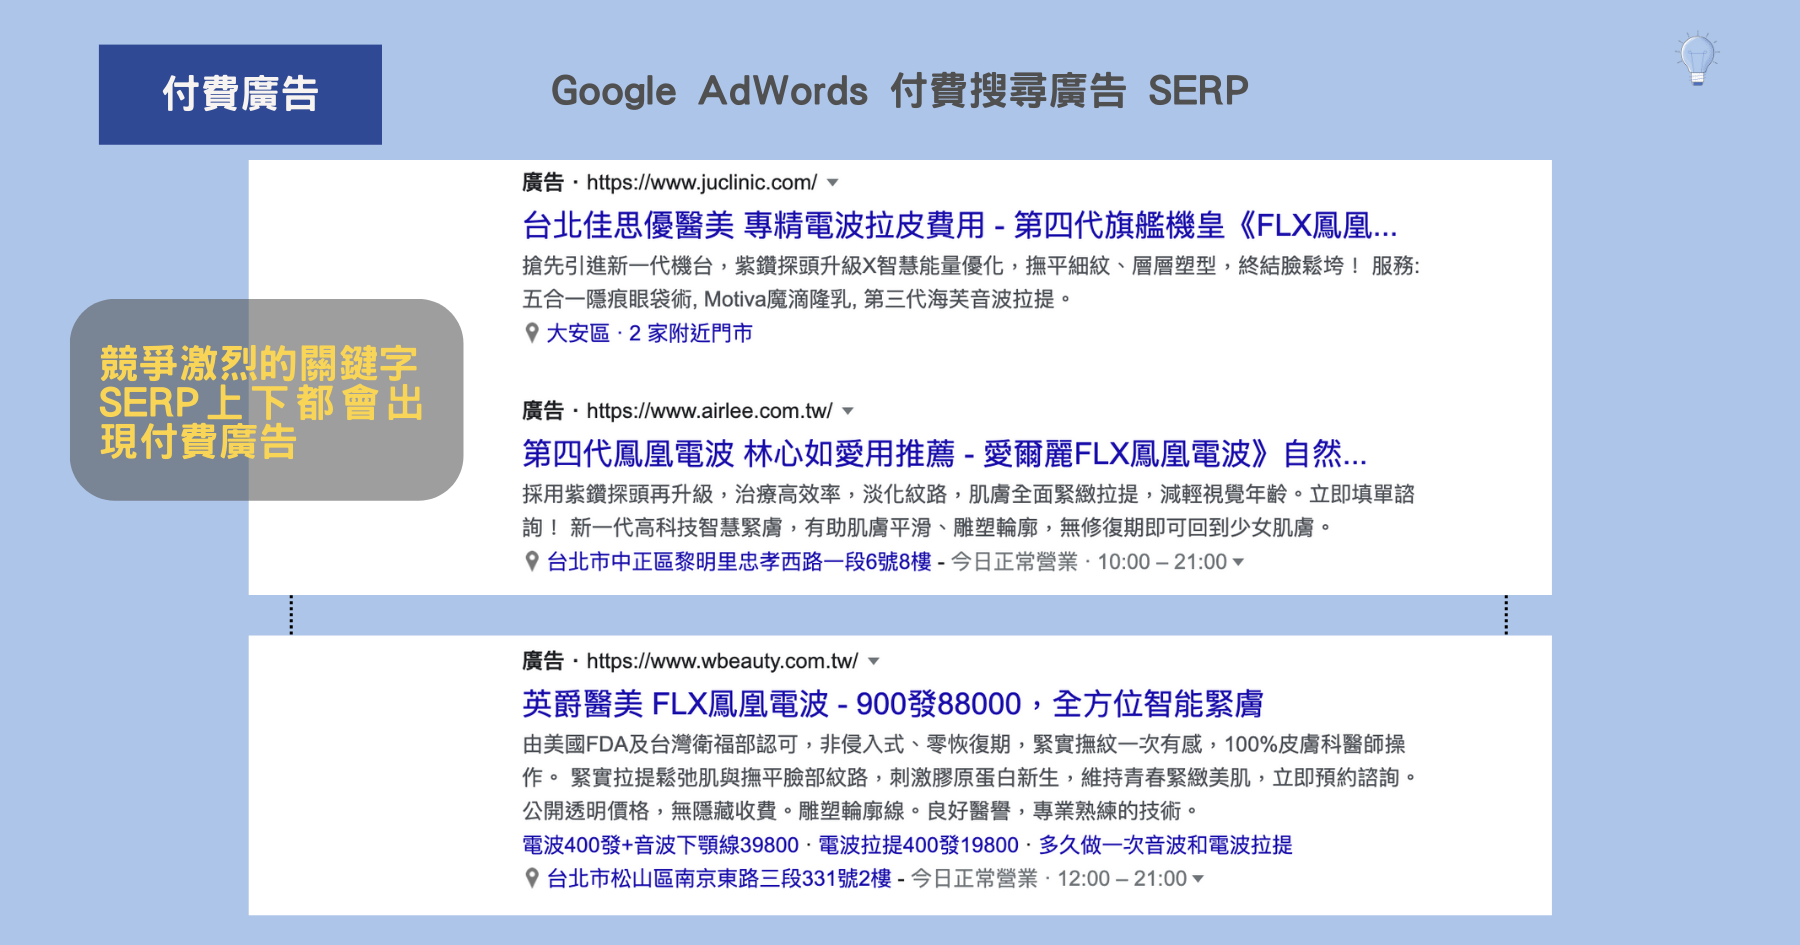 Google AdWords 付費搜尋廣告 SERP